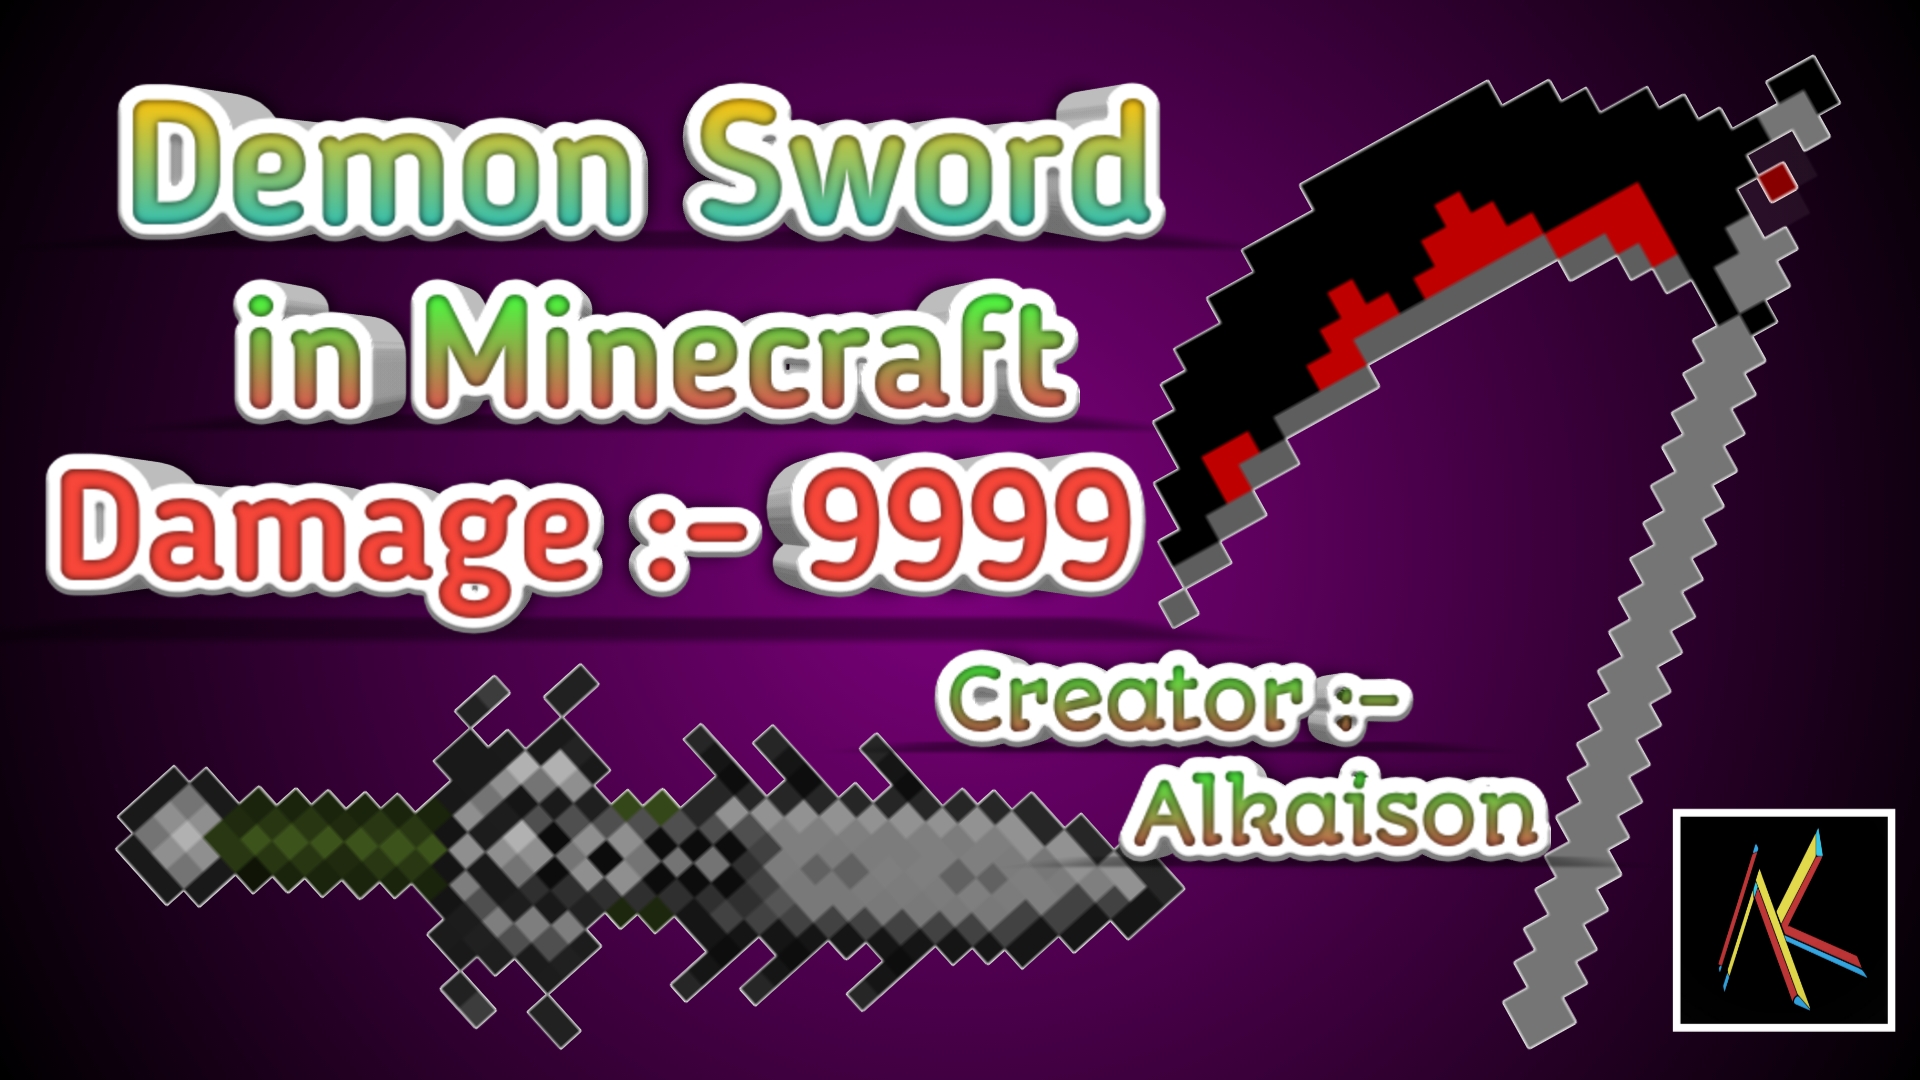 Scythe Sword Minecraft New addon for Demon